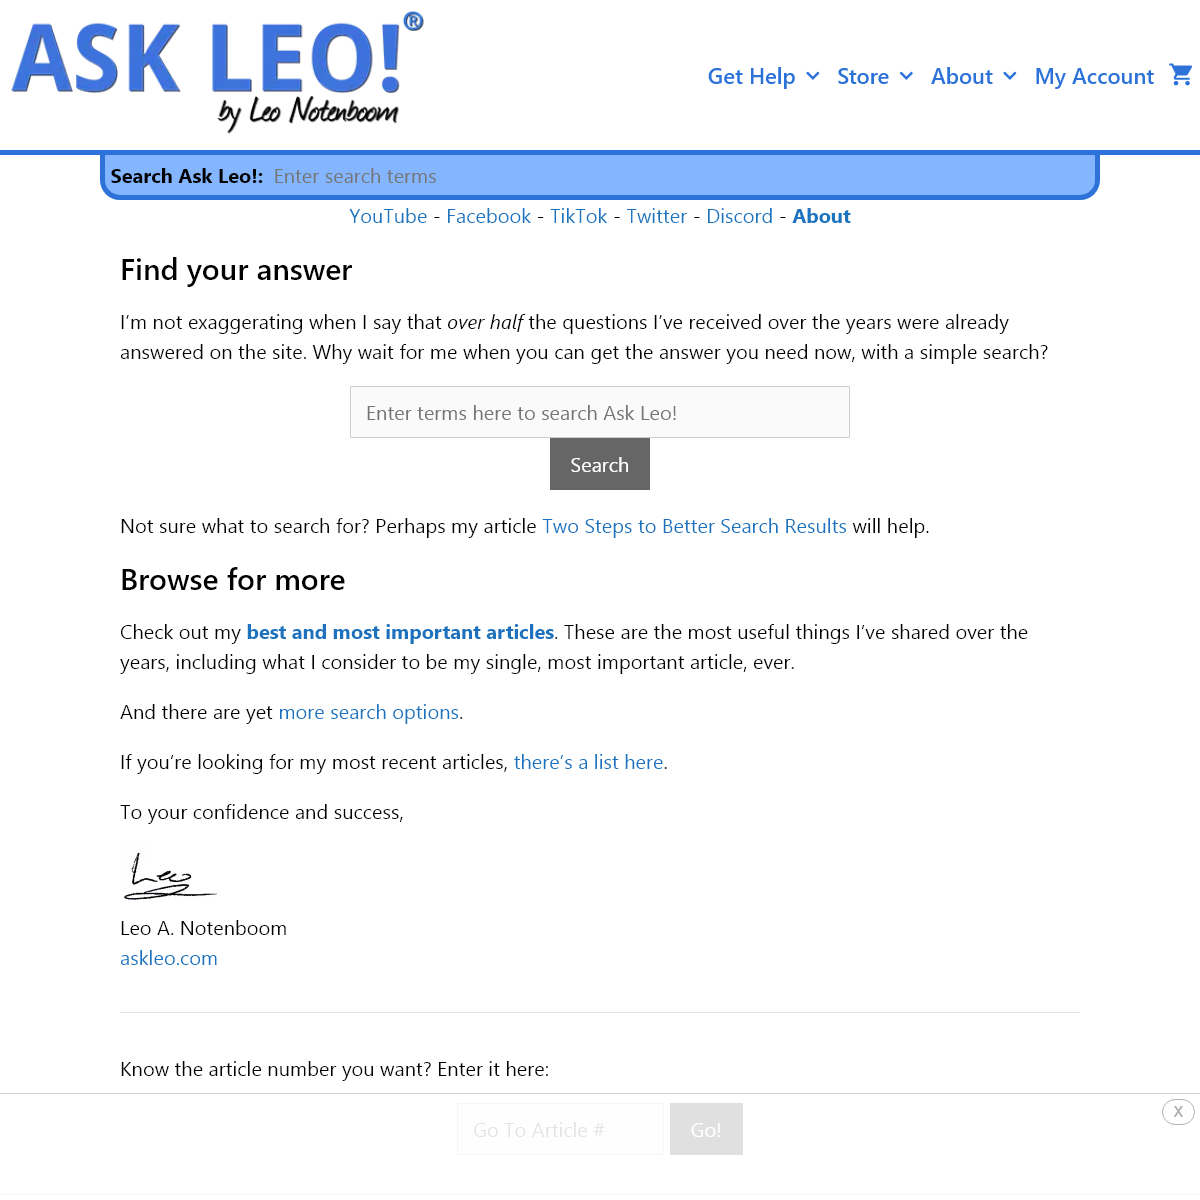 A complete backup of ask-leo.com